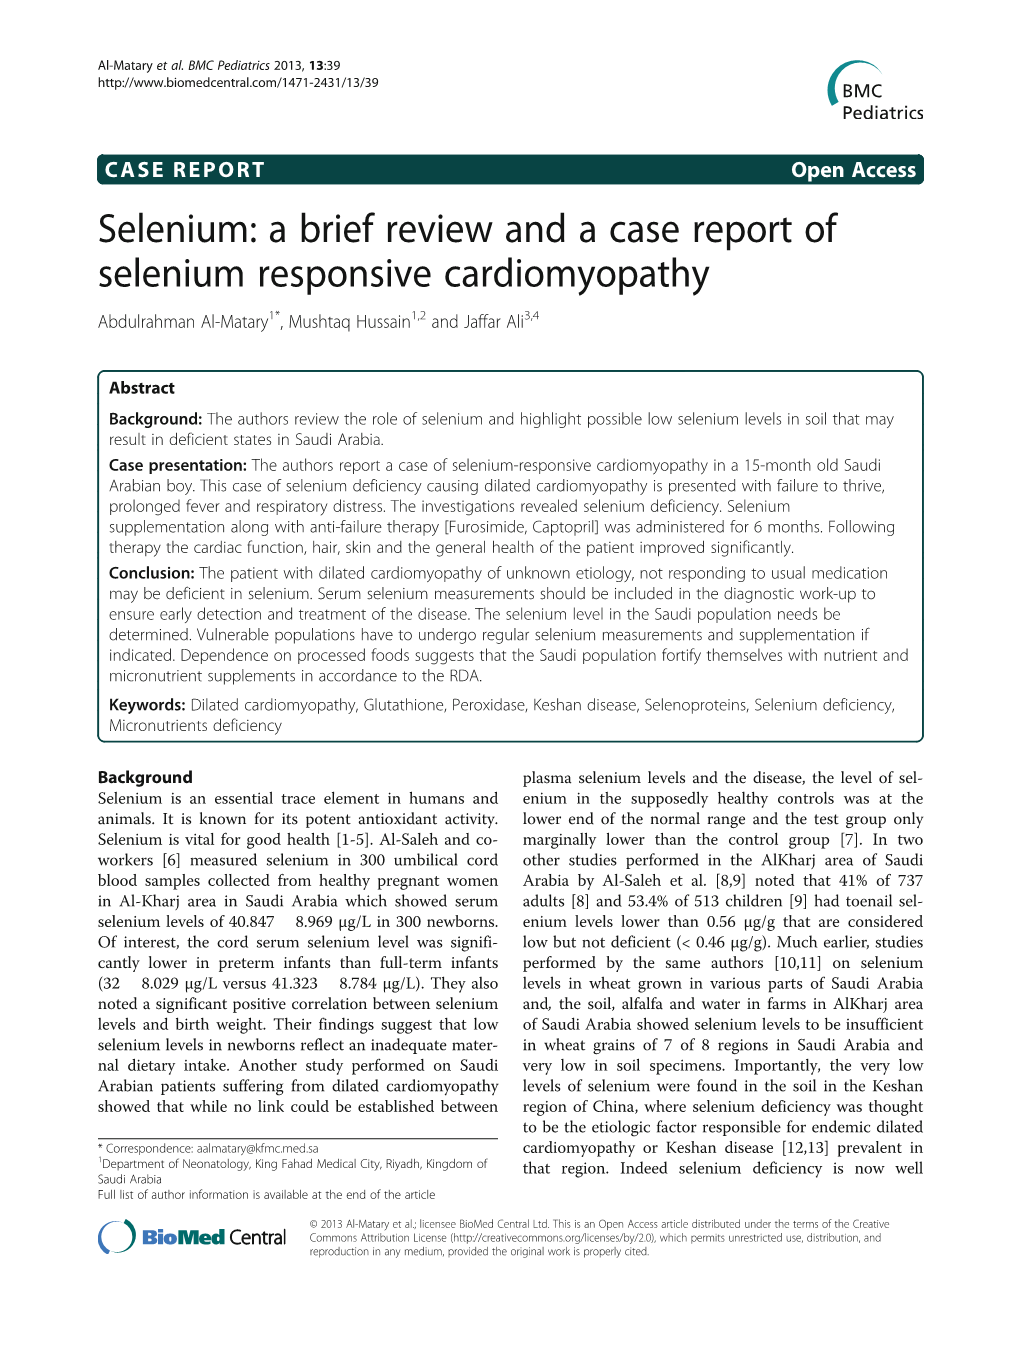 A Brief Review and a Case Report of Selenium Responsive Cardiomyopathy Abdulrahman Al-Matary1*, Mushtaq Hussain1,2 and Jaffar Ali3,4